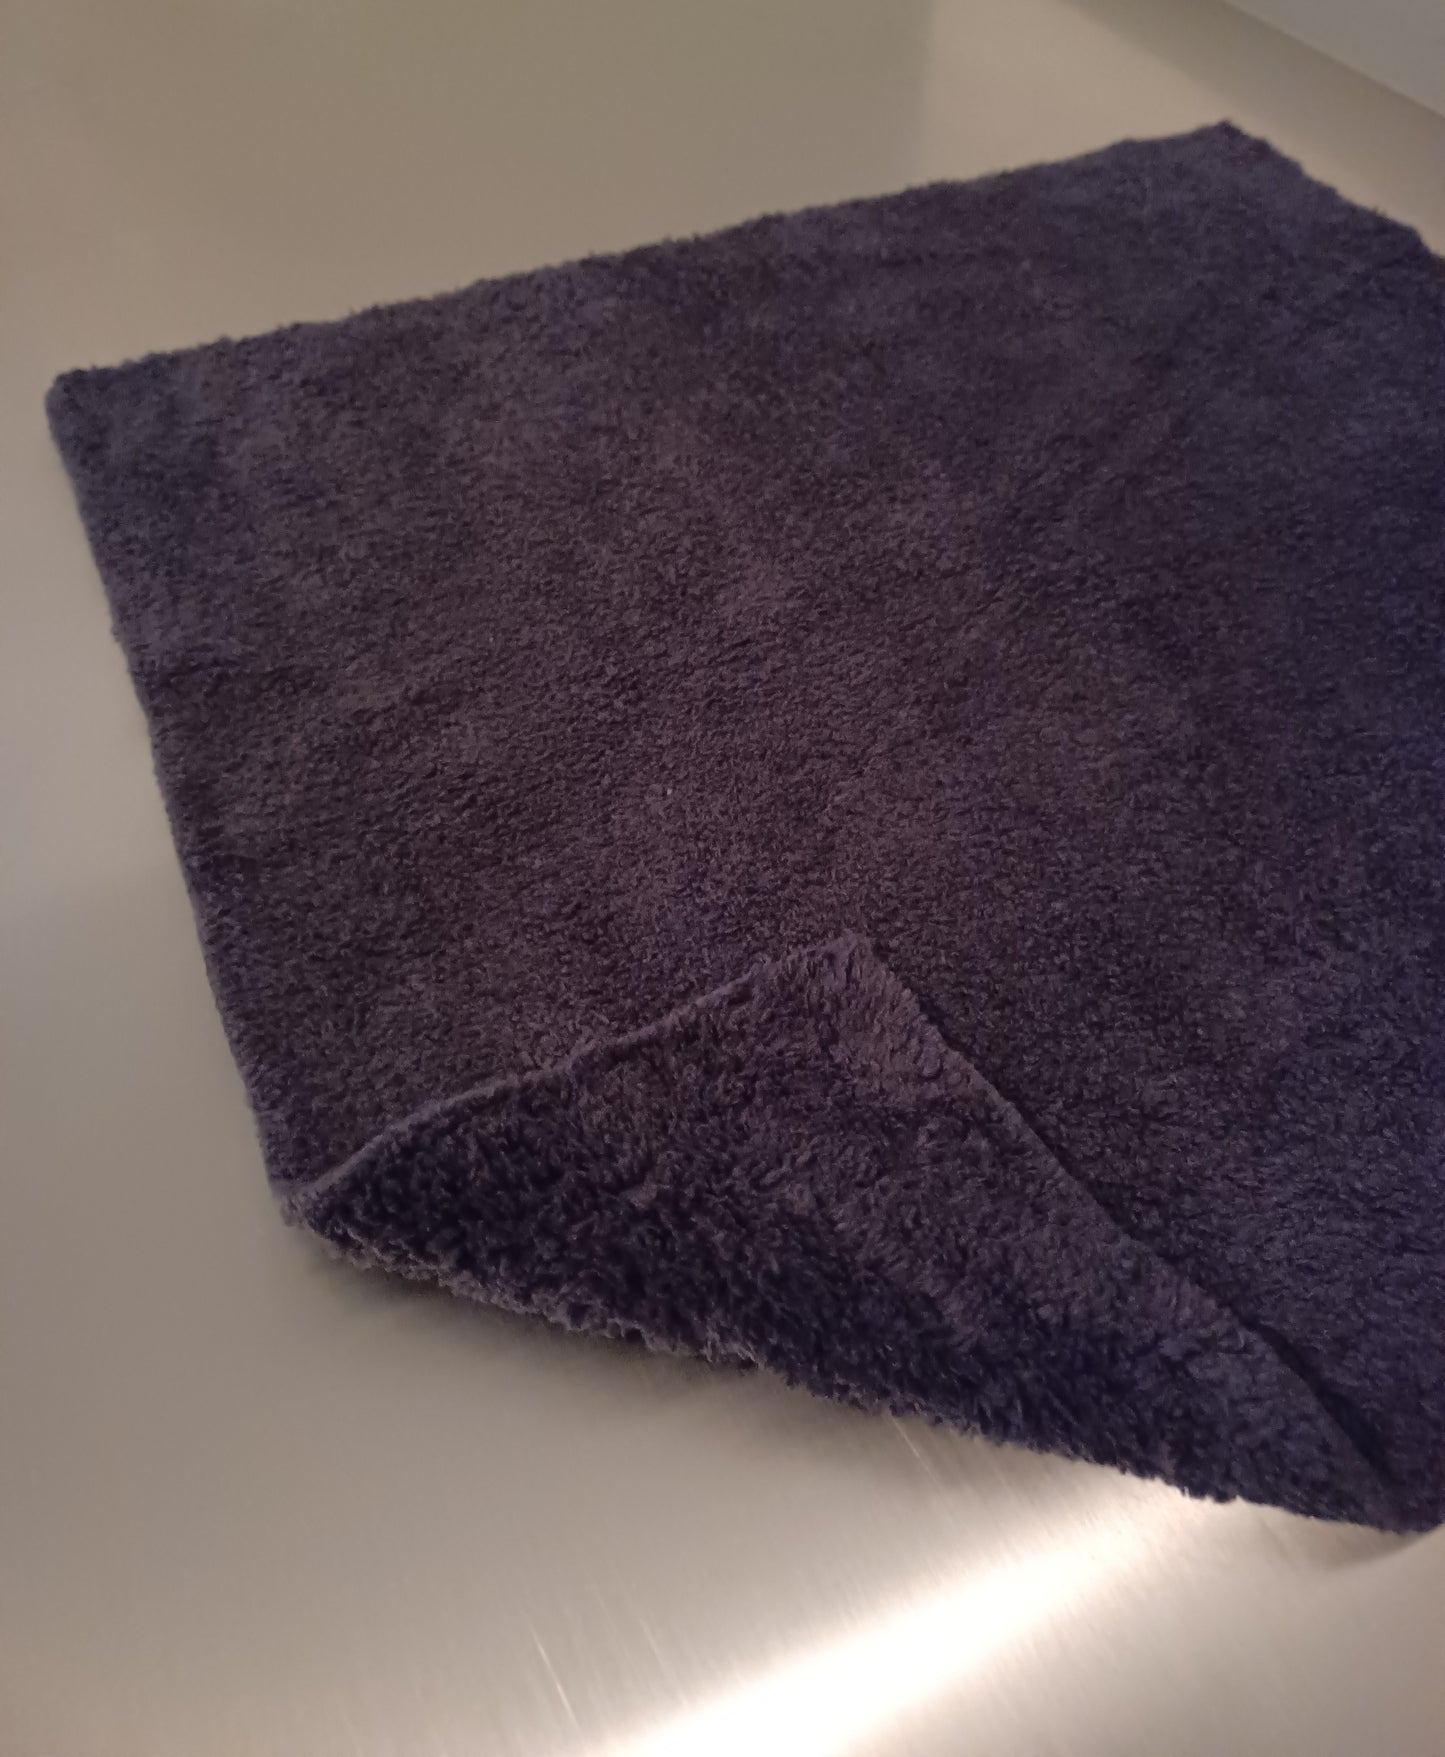 4 Piece 16x16 Premium Microfiber Towels